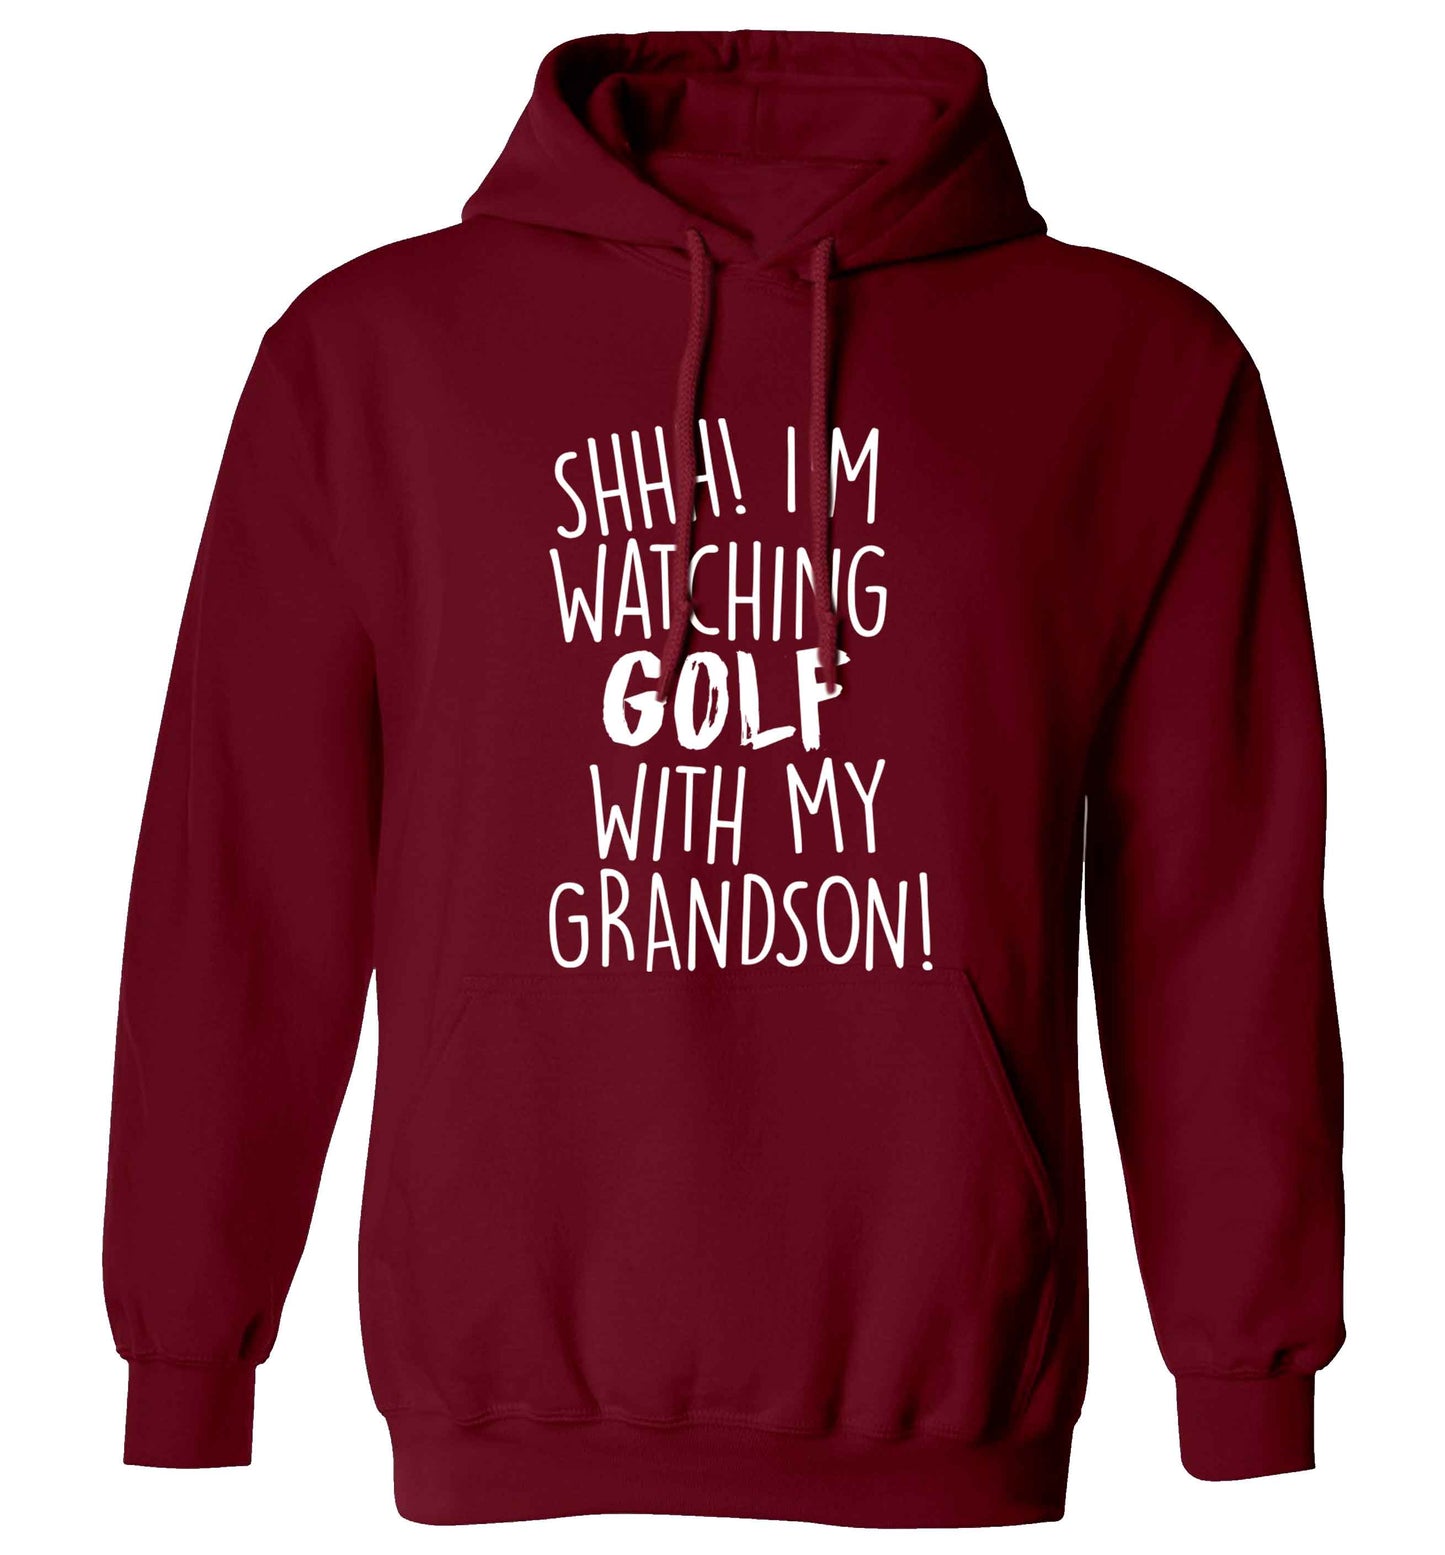 Shh I'm watching golf with my grandsonadults unisex maroon hoodie 2XL